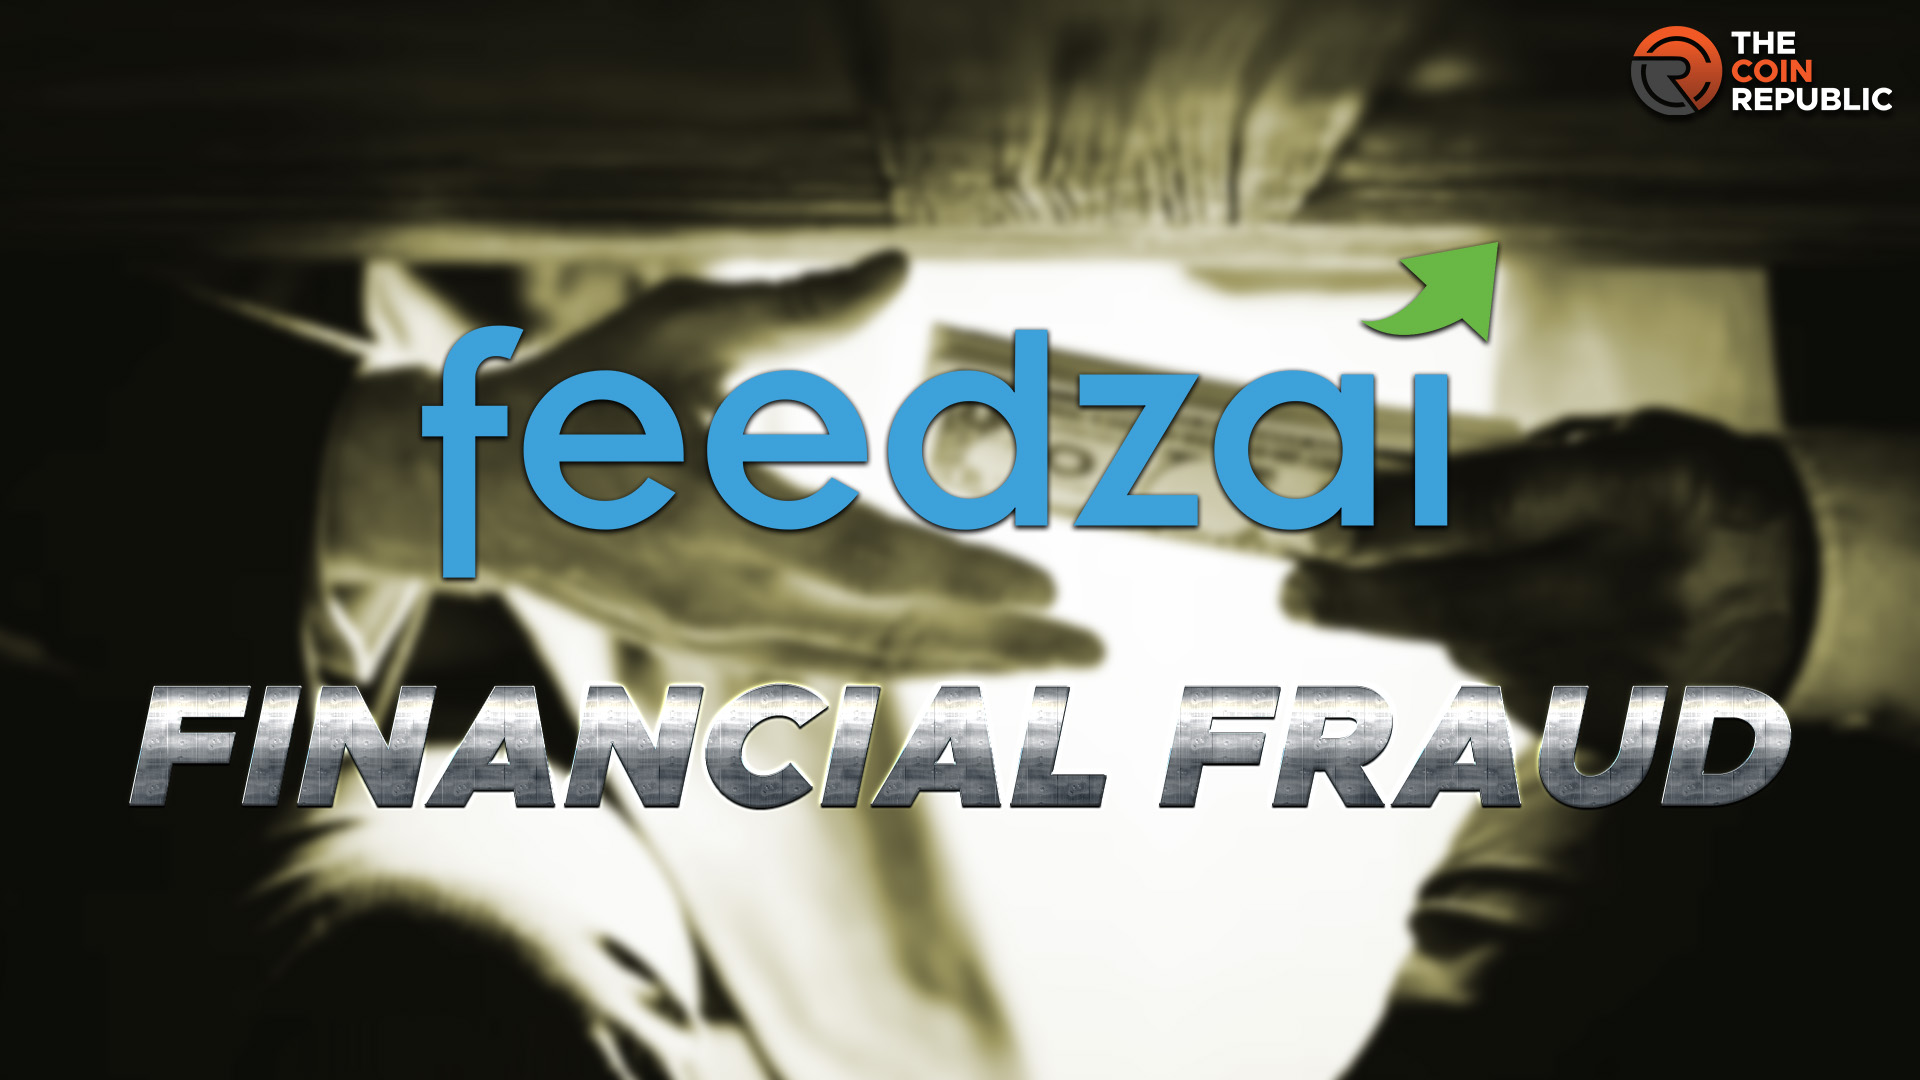 Feedzai: A High-tech Warrior Ready to Battle Financial Fraud  